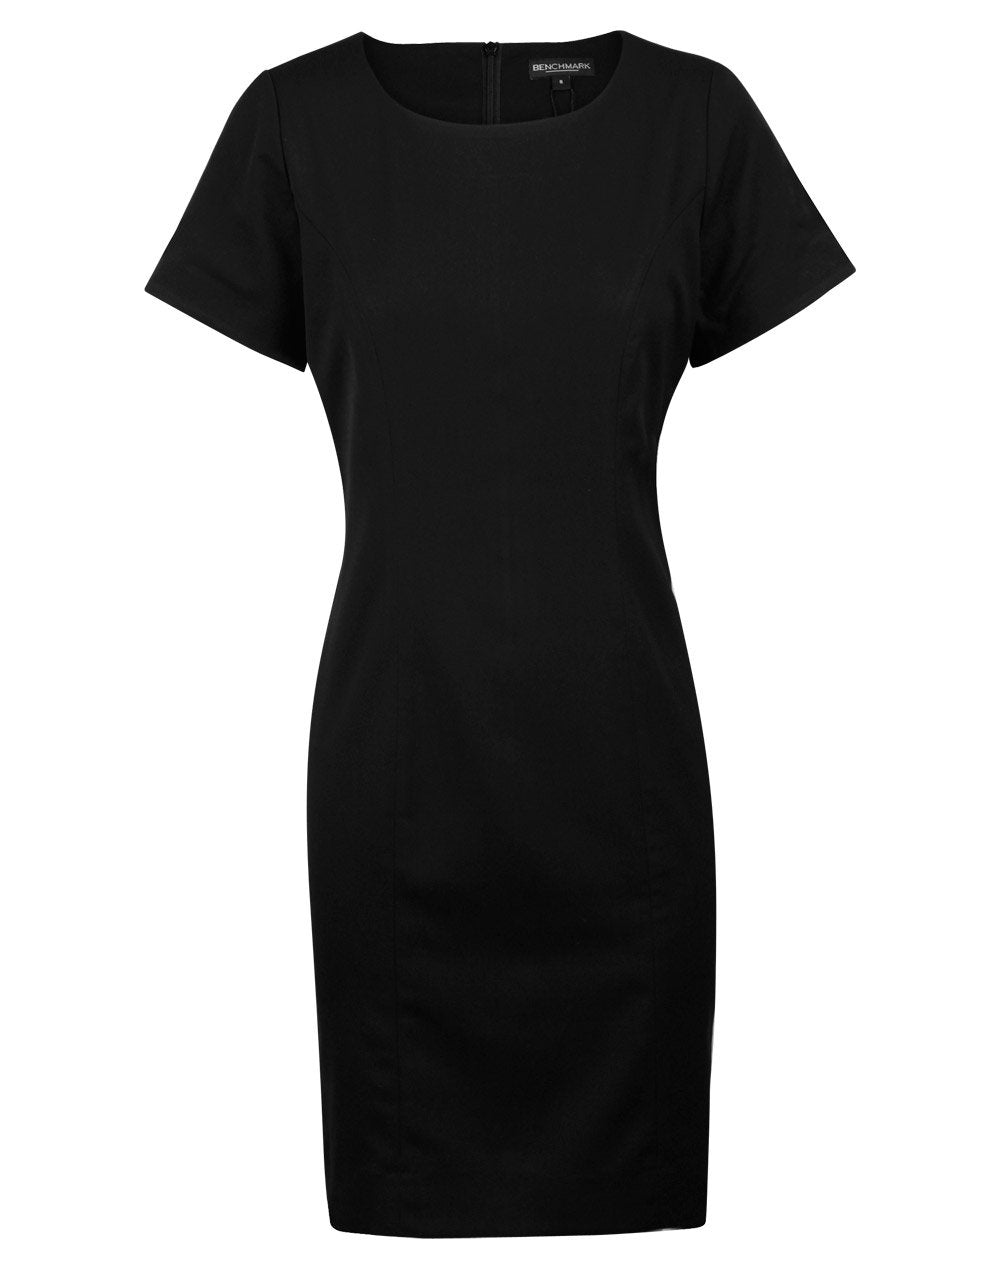 Benchmark M9282 Ladies Poly/viscose Stretch Short Sleeve Dress